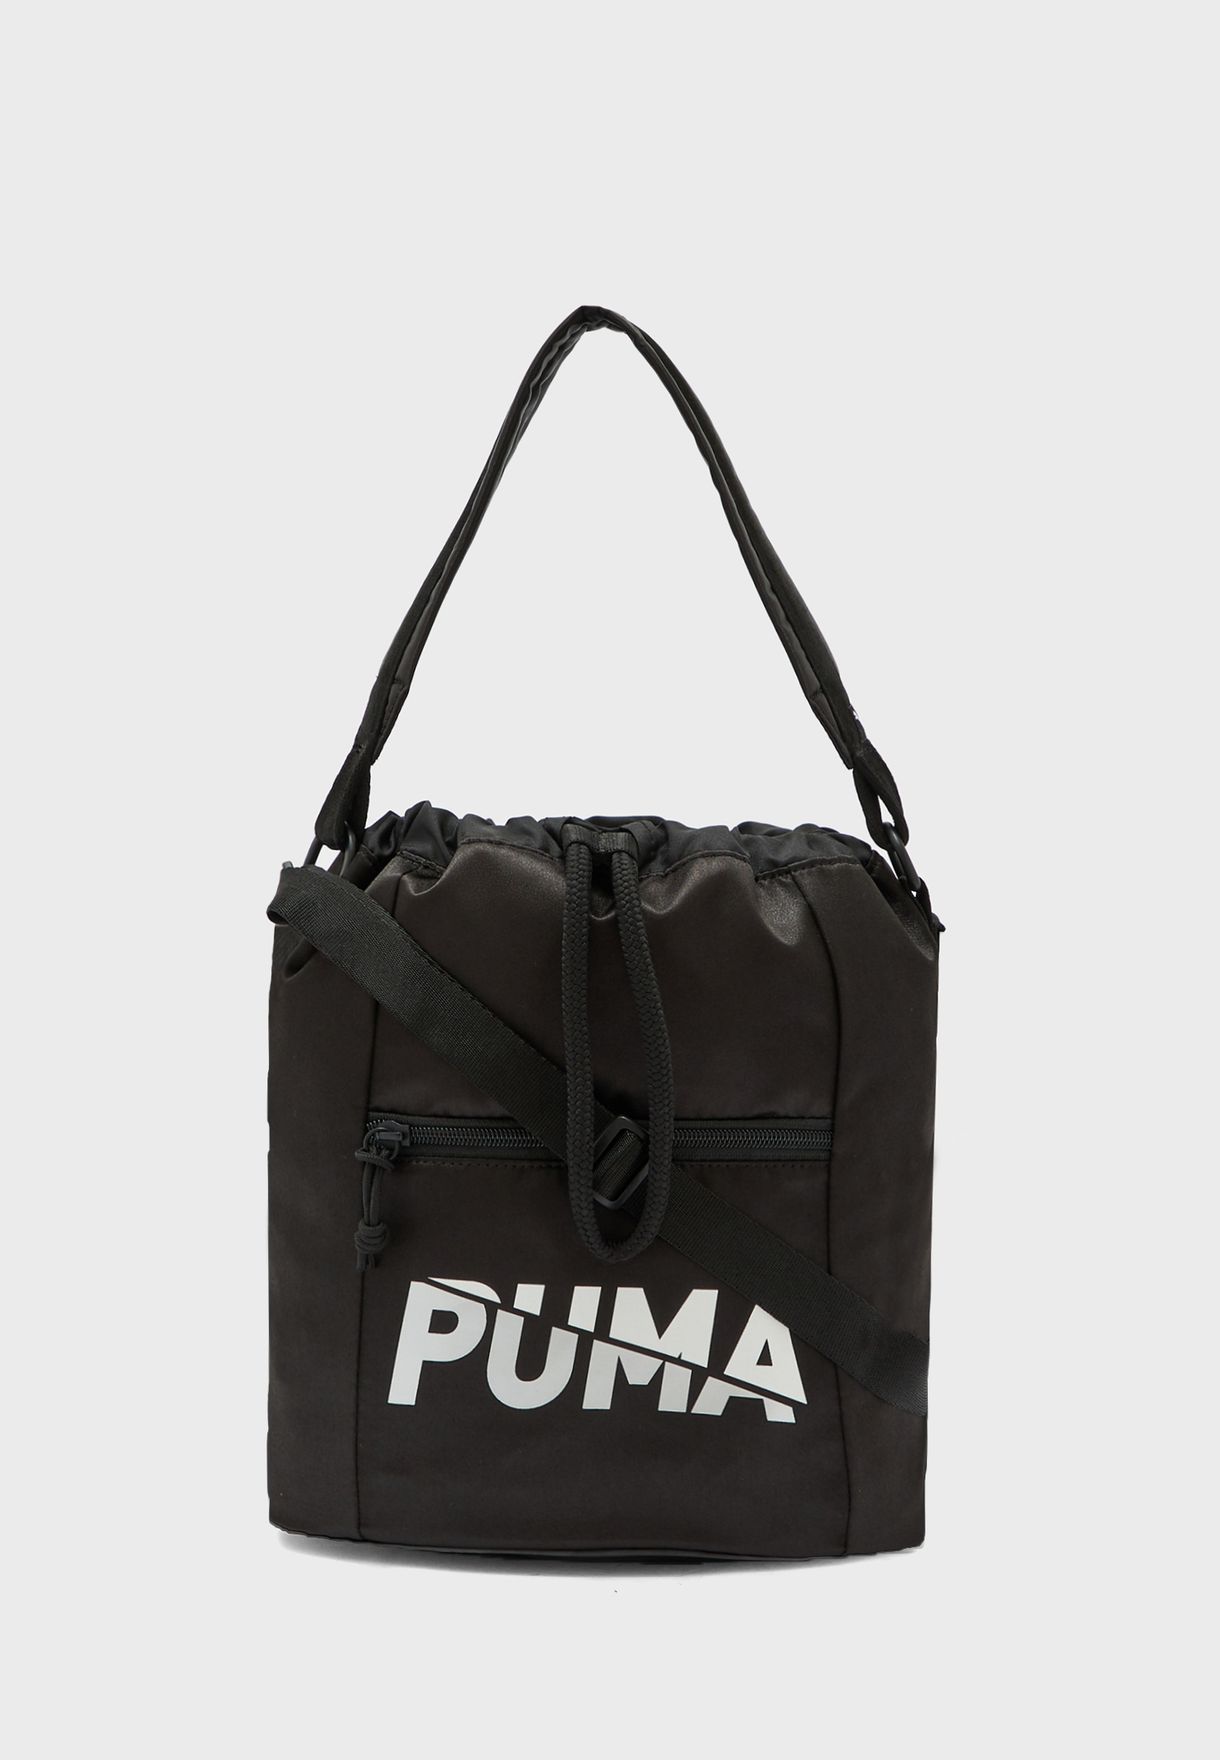 puma bags discount